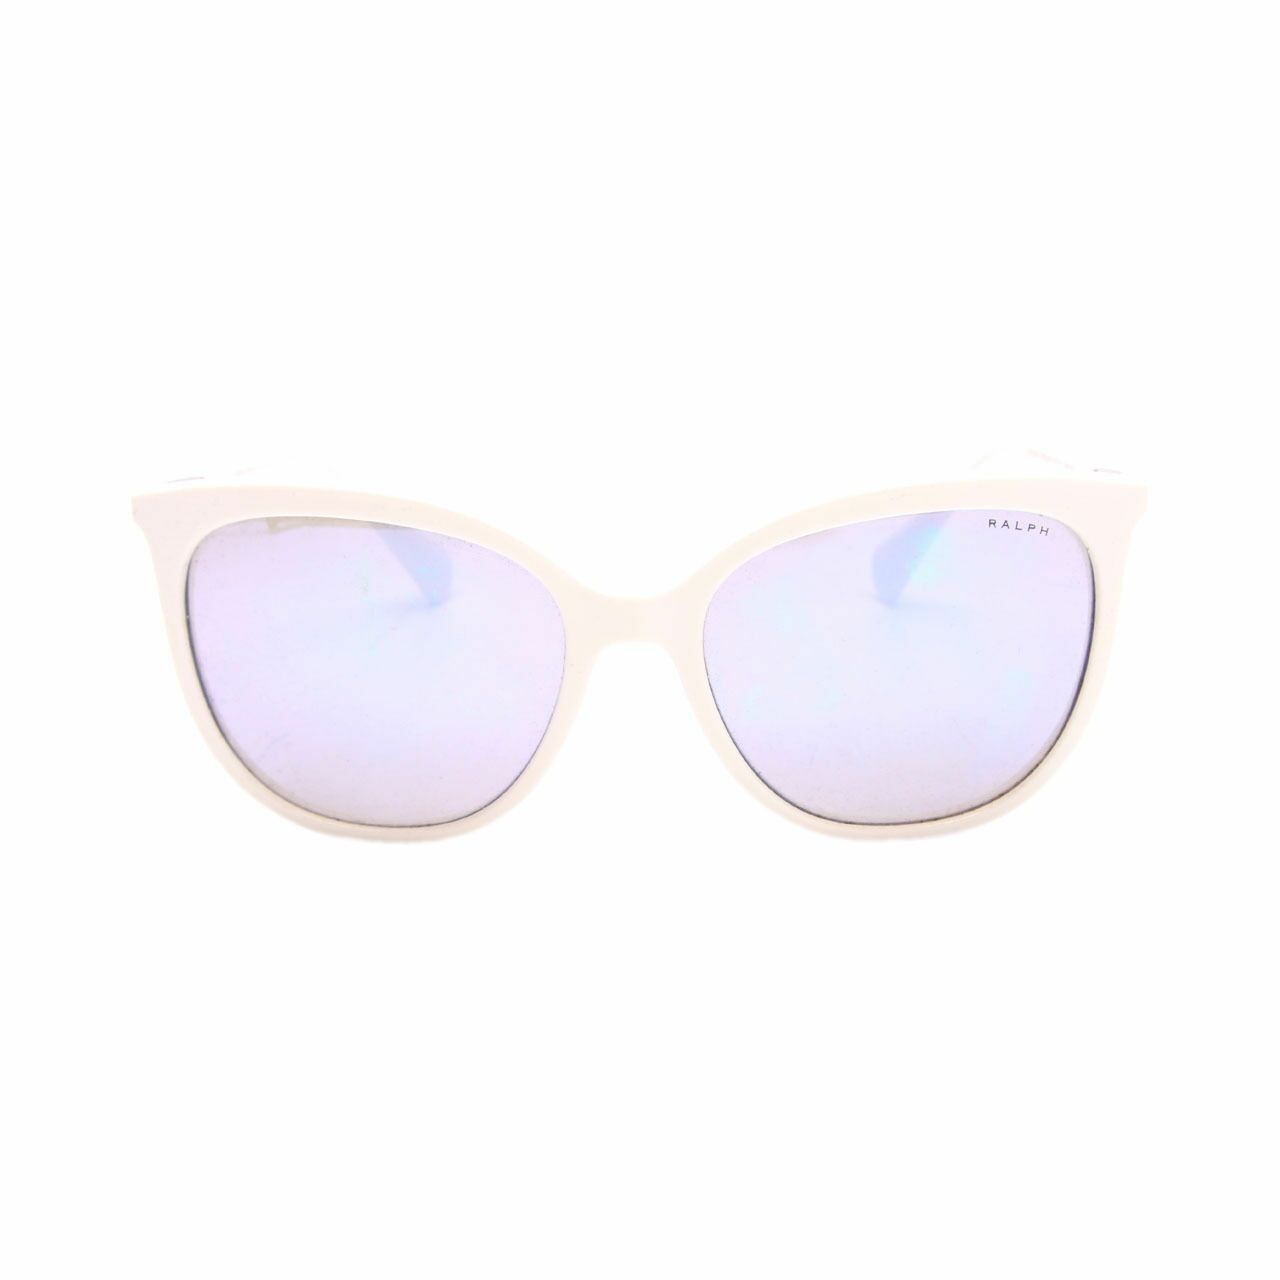 Ralph Lauren White Sunglasses